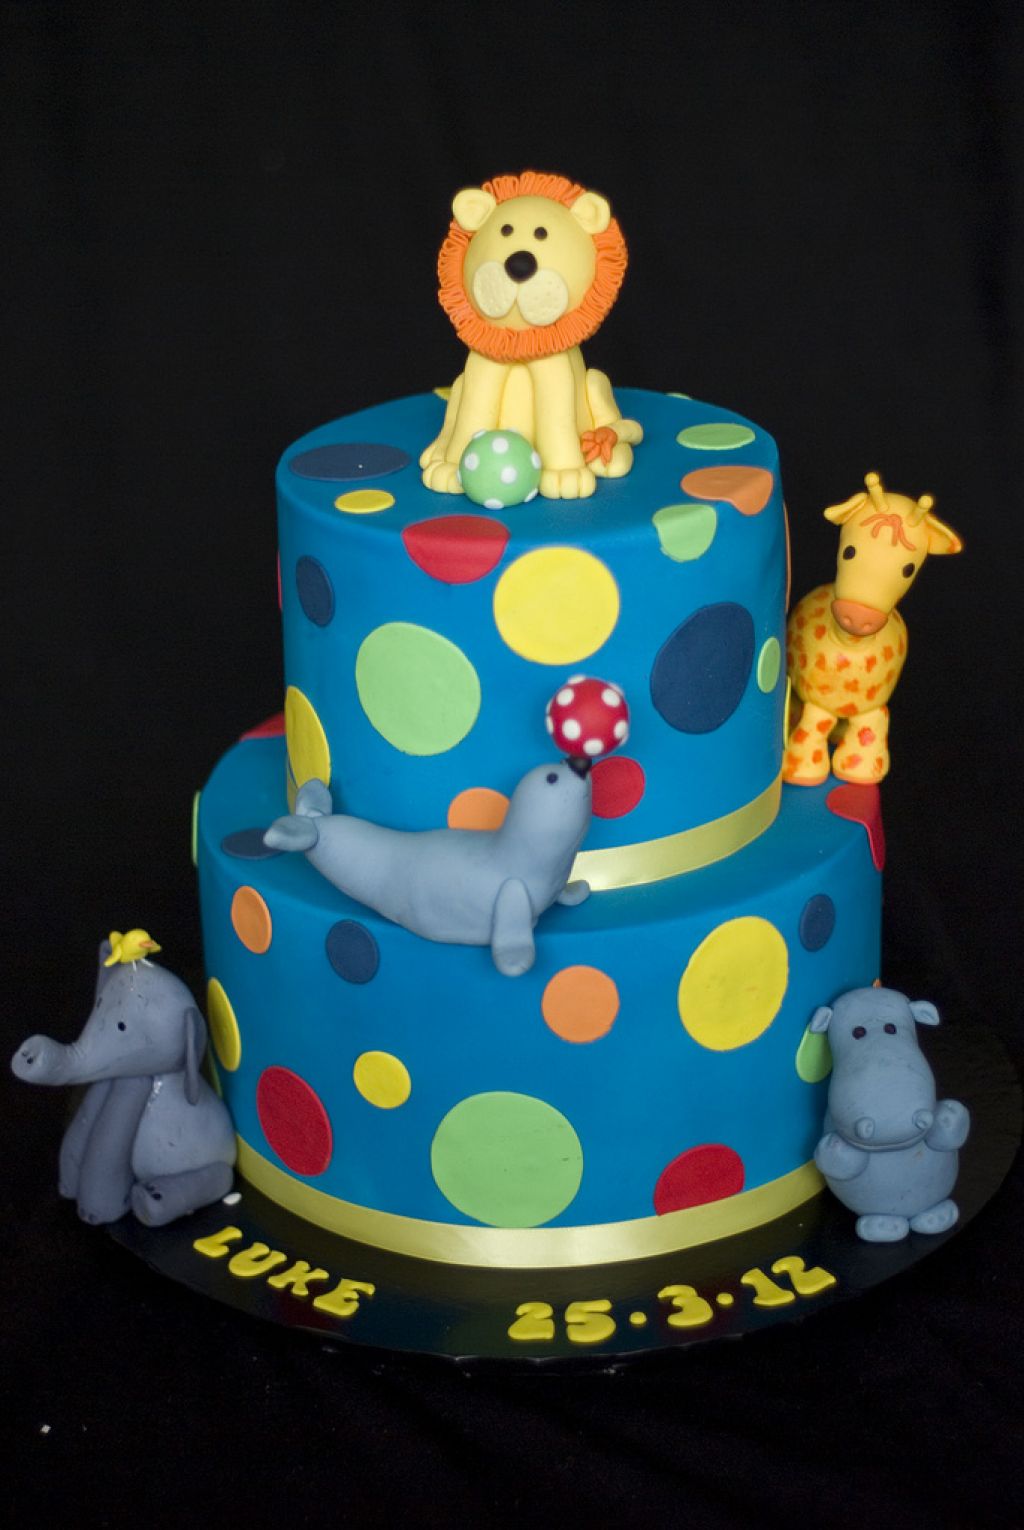 cake decorating11 Birthday Cake Decorating Ideas